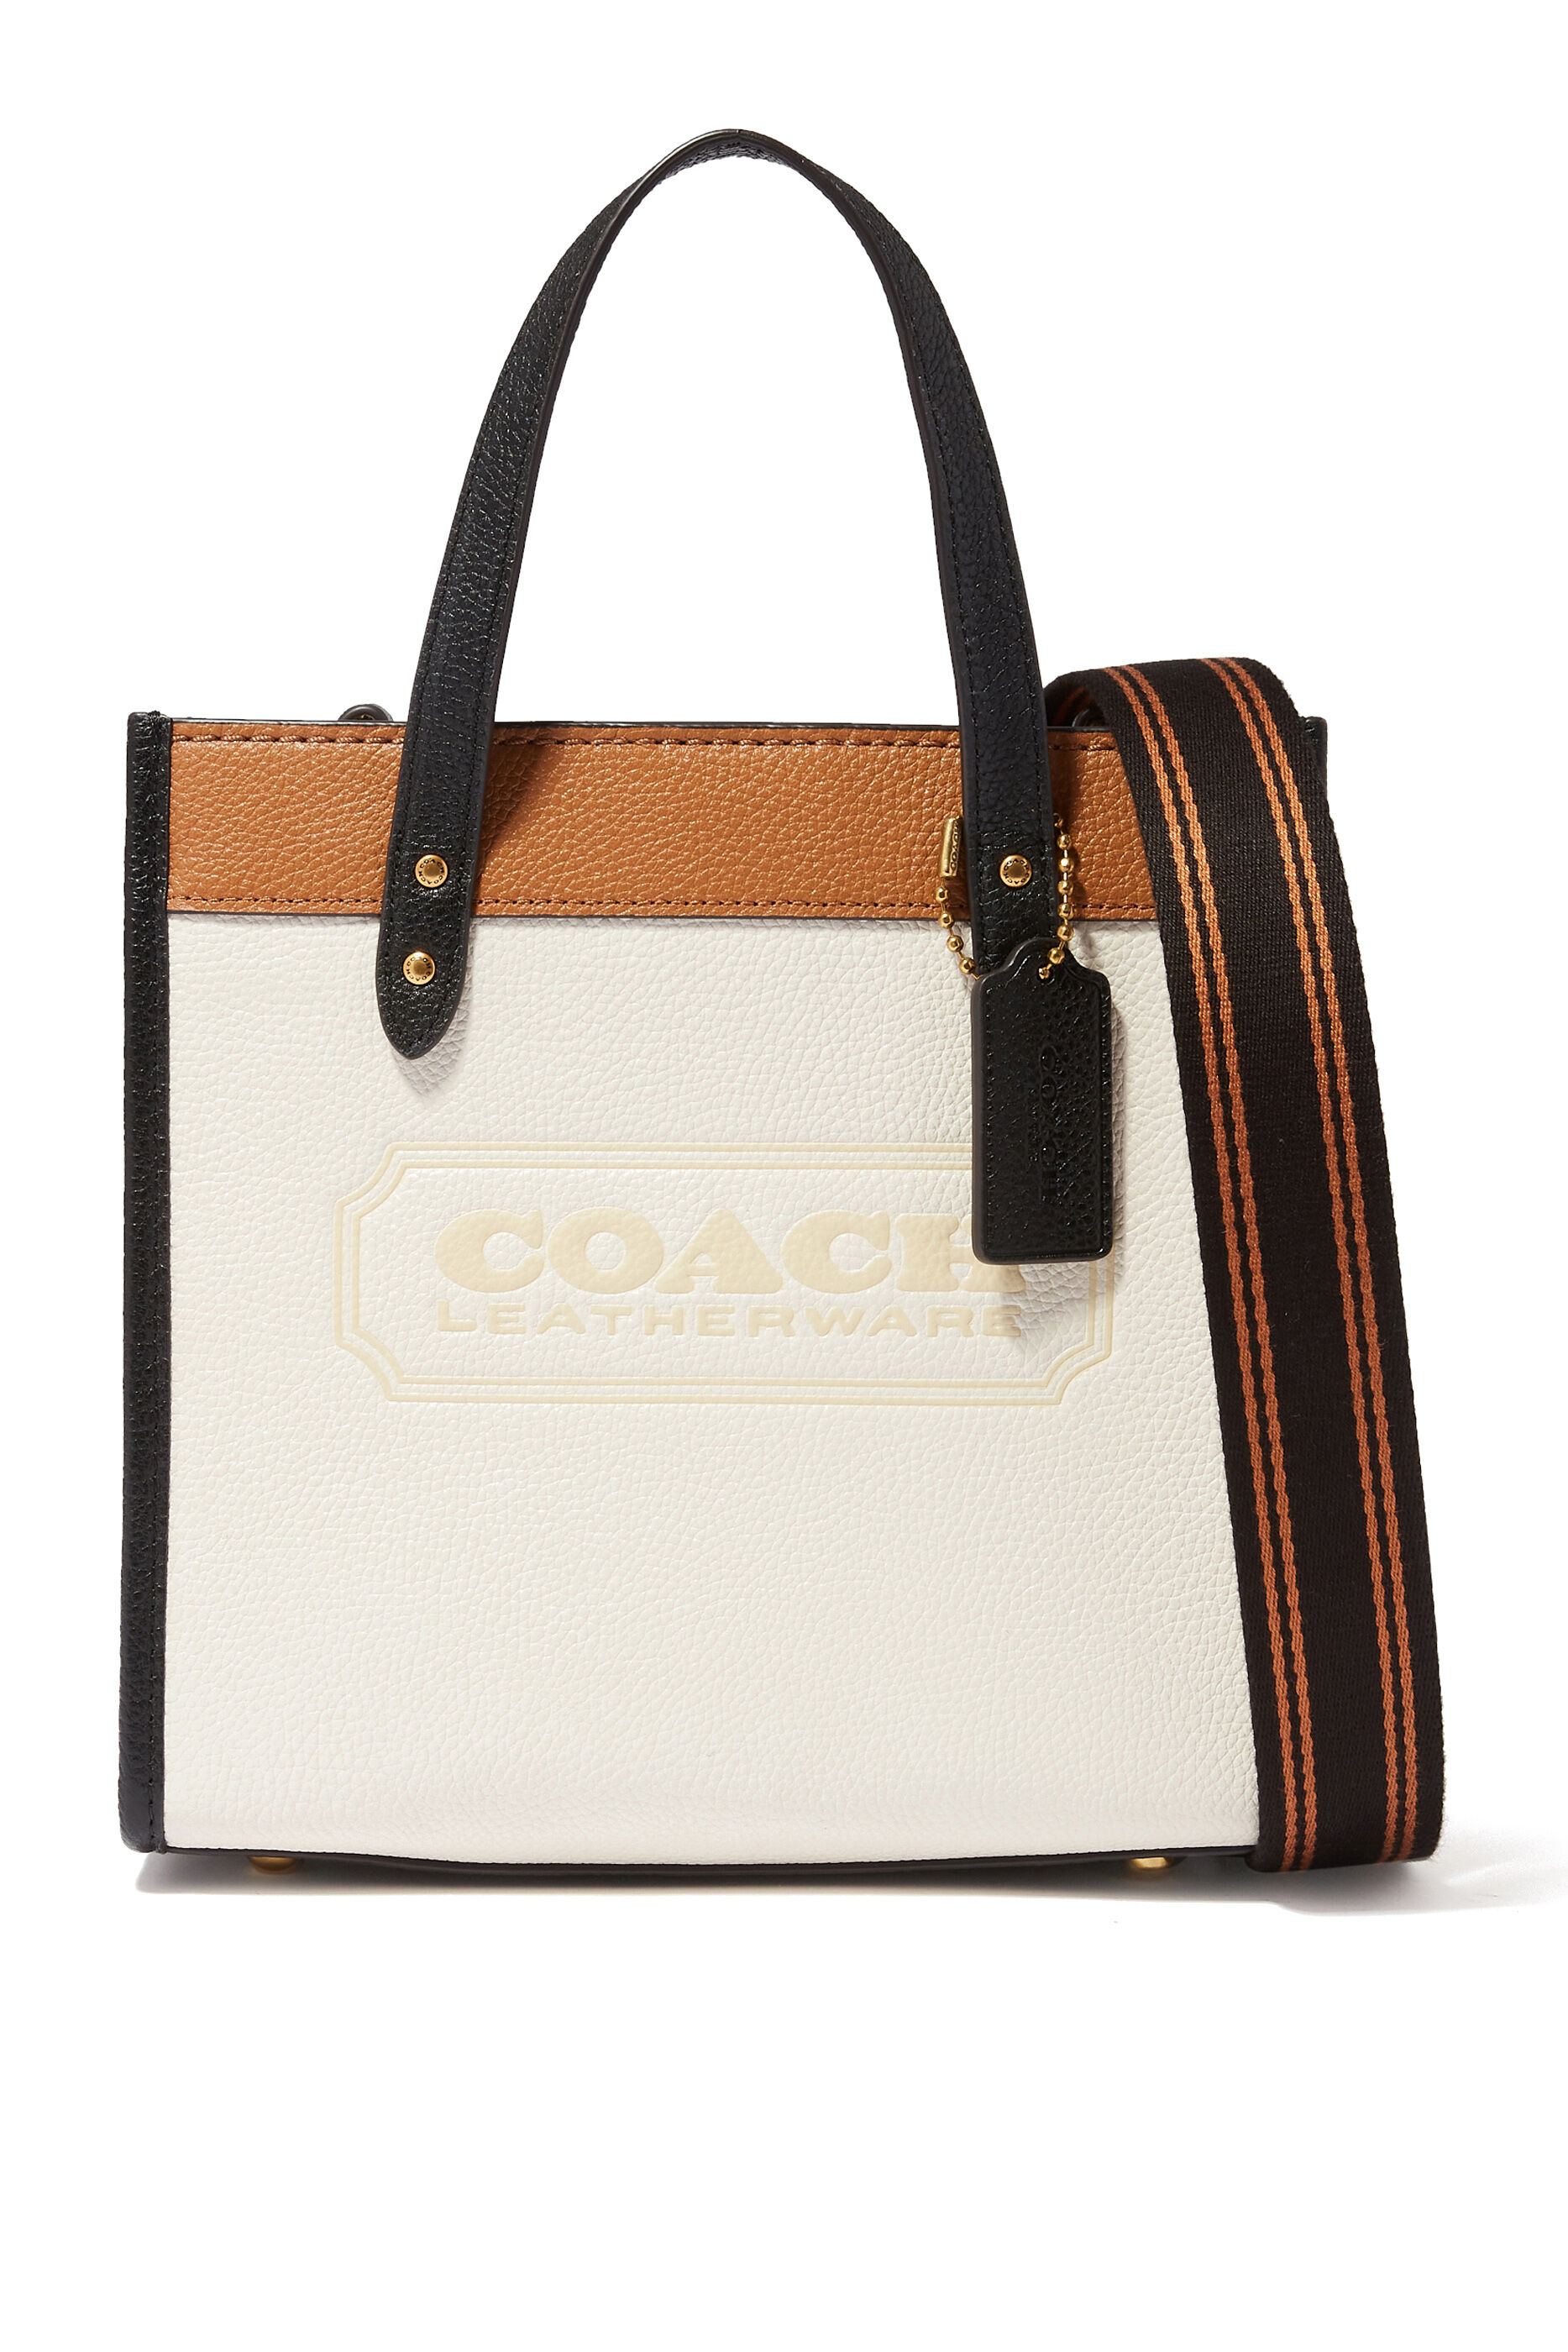 Coach Bag For Women,Burgundy - Satchels Bags: Buy Online at Best Price in  UAE - Amazon.ae